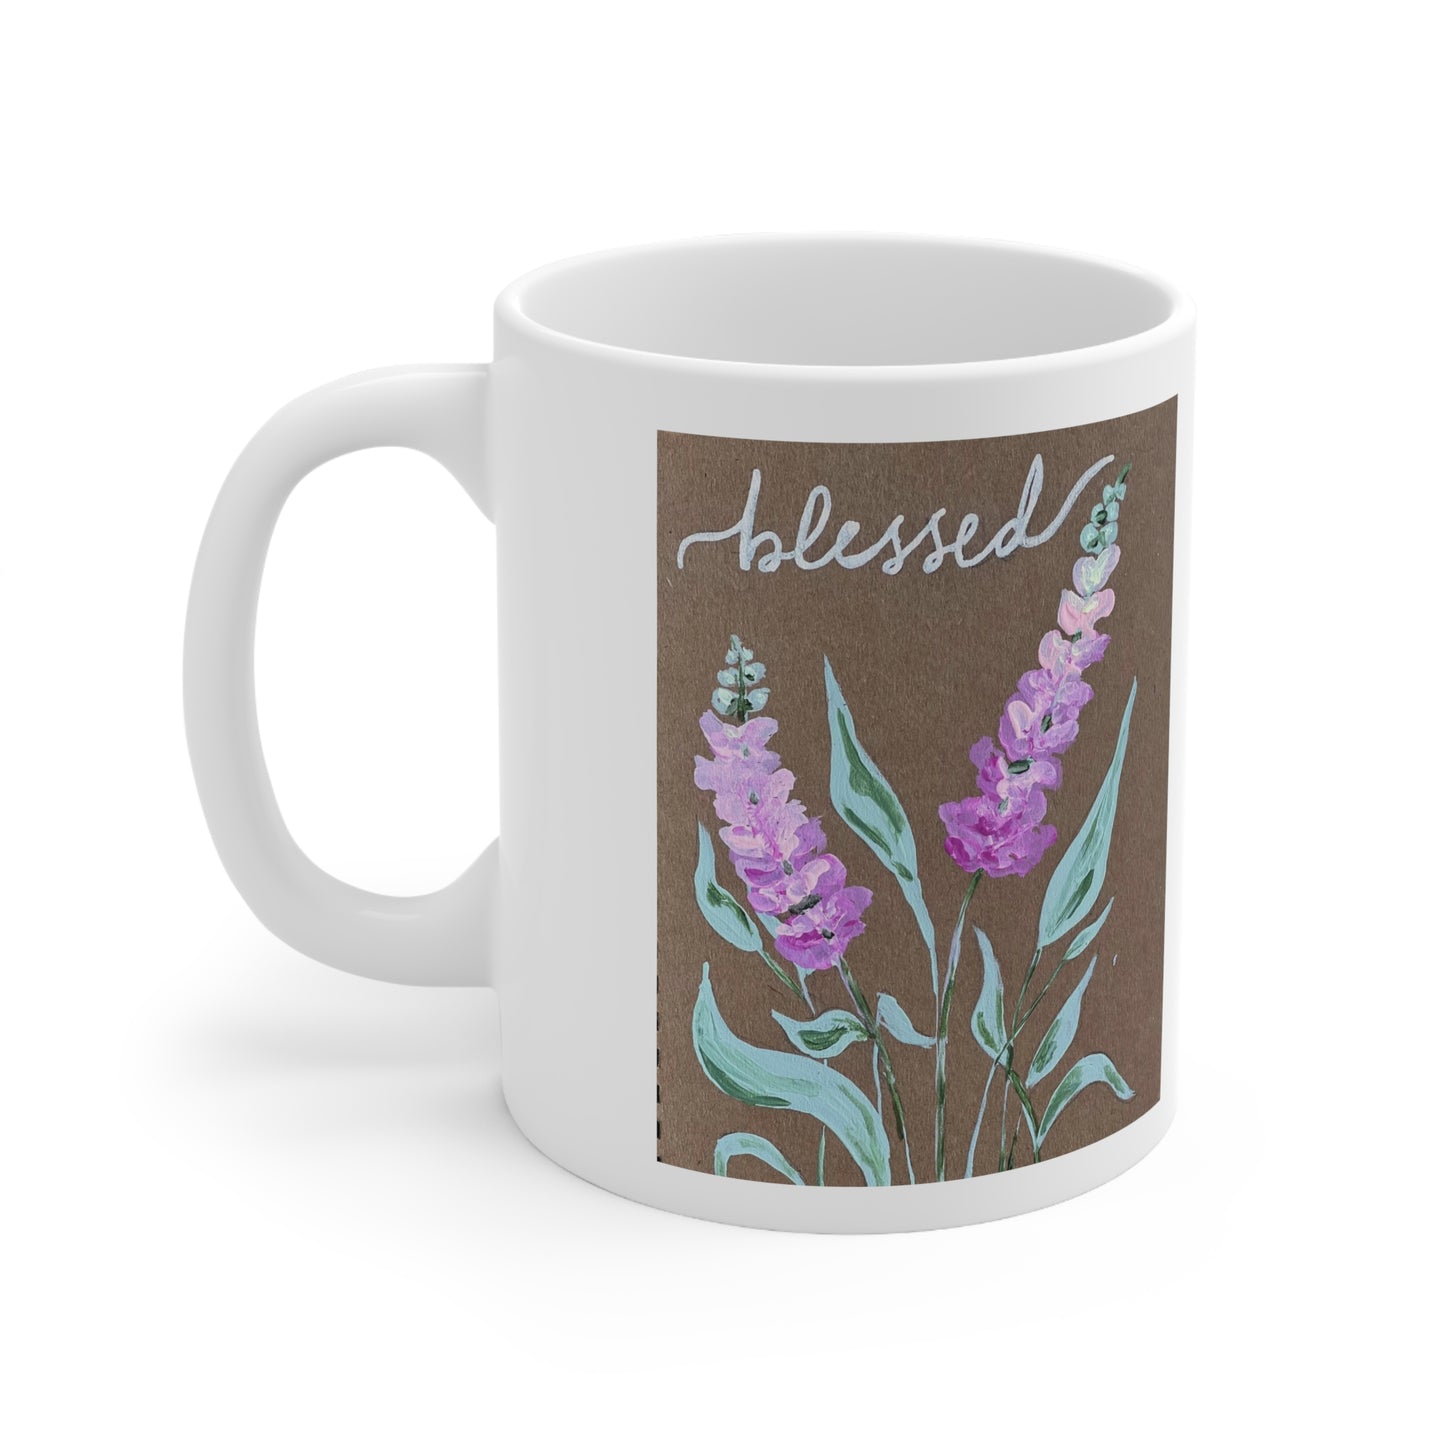 Blessed - Ceramic Mug 11oz